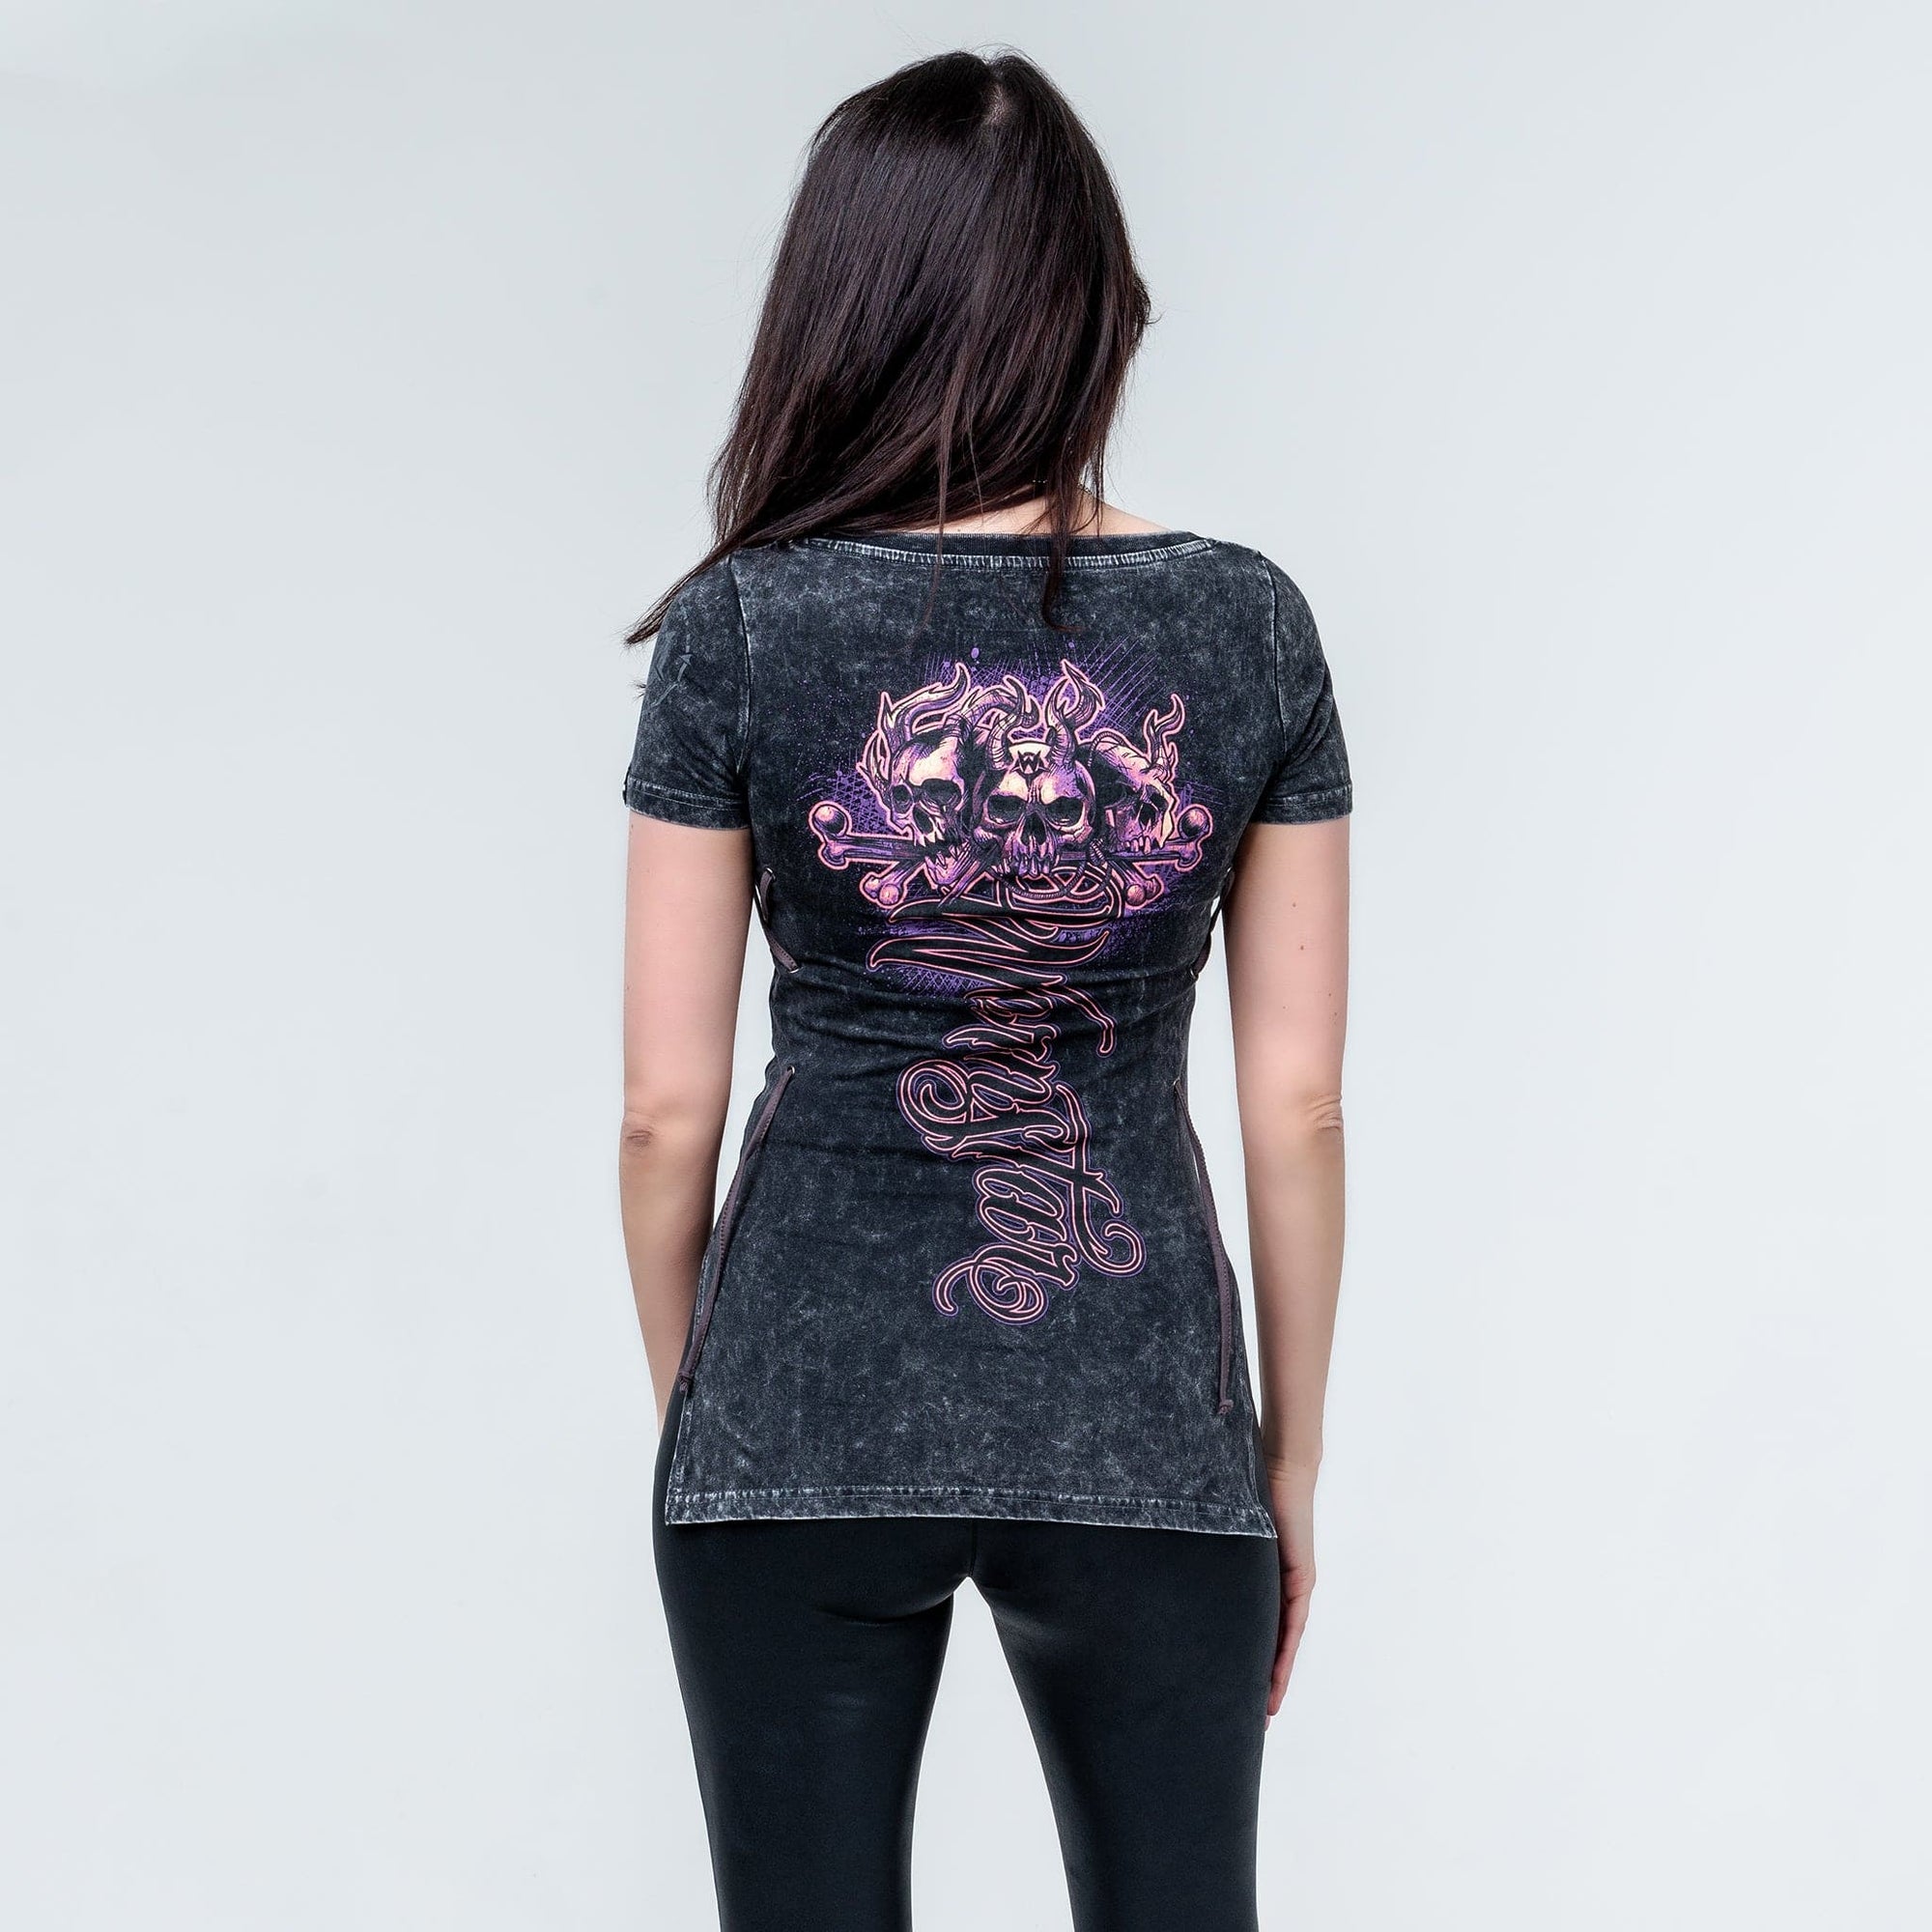 Wornstar Clothing Womens Tee. Voodoo Skull T-Shirt.